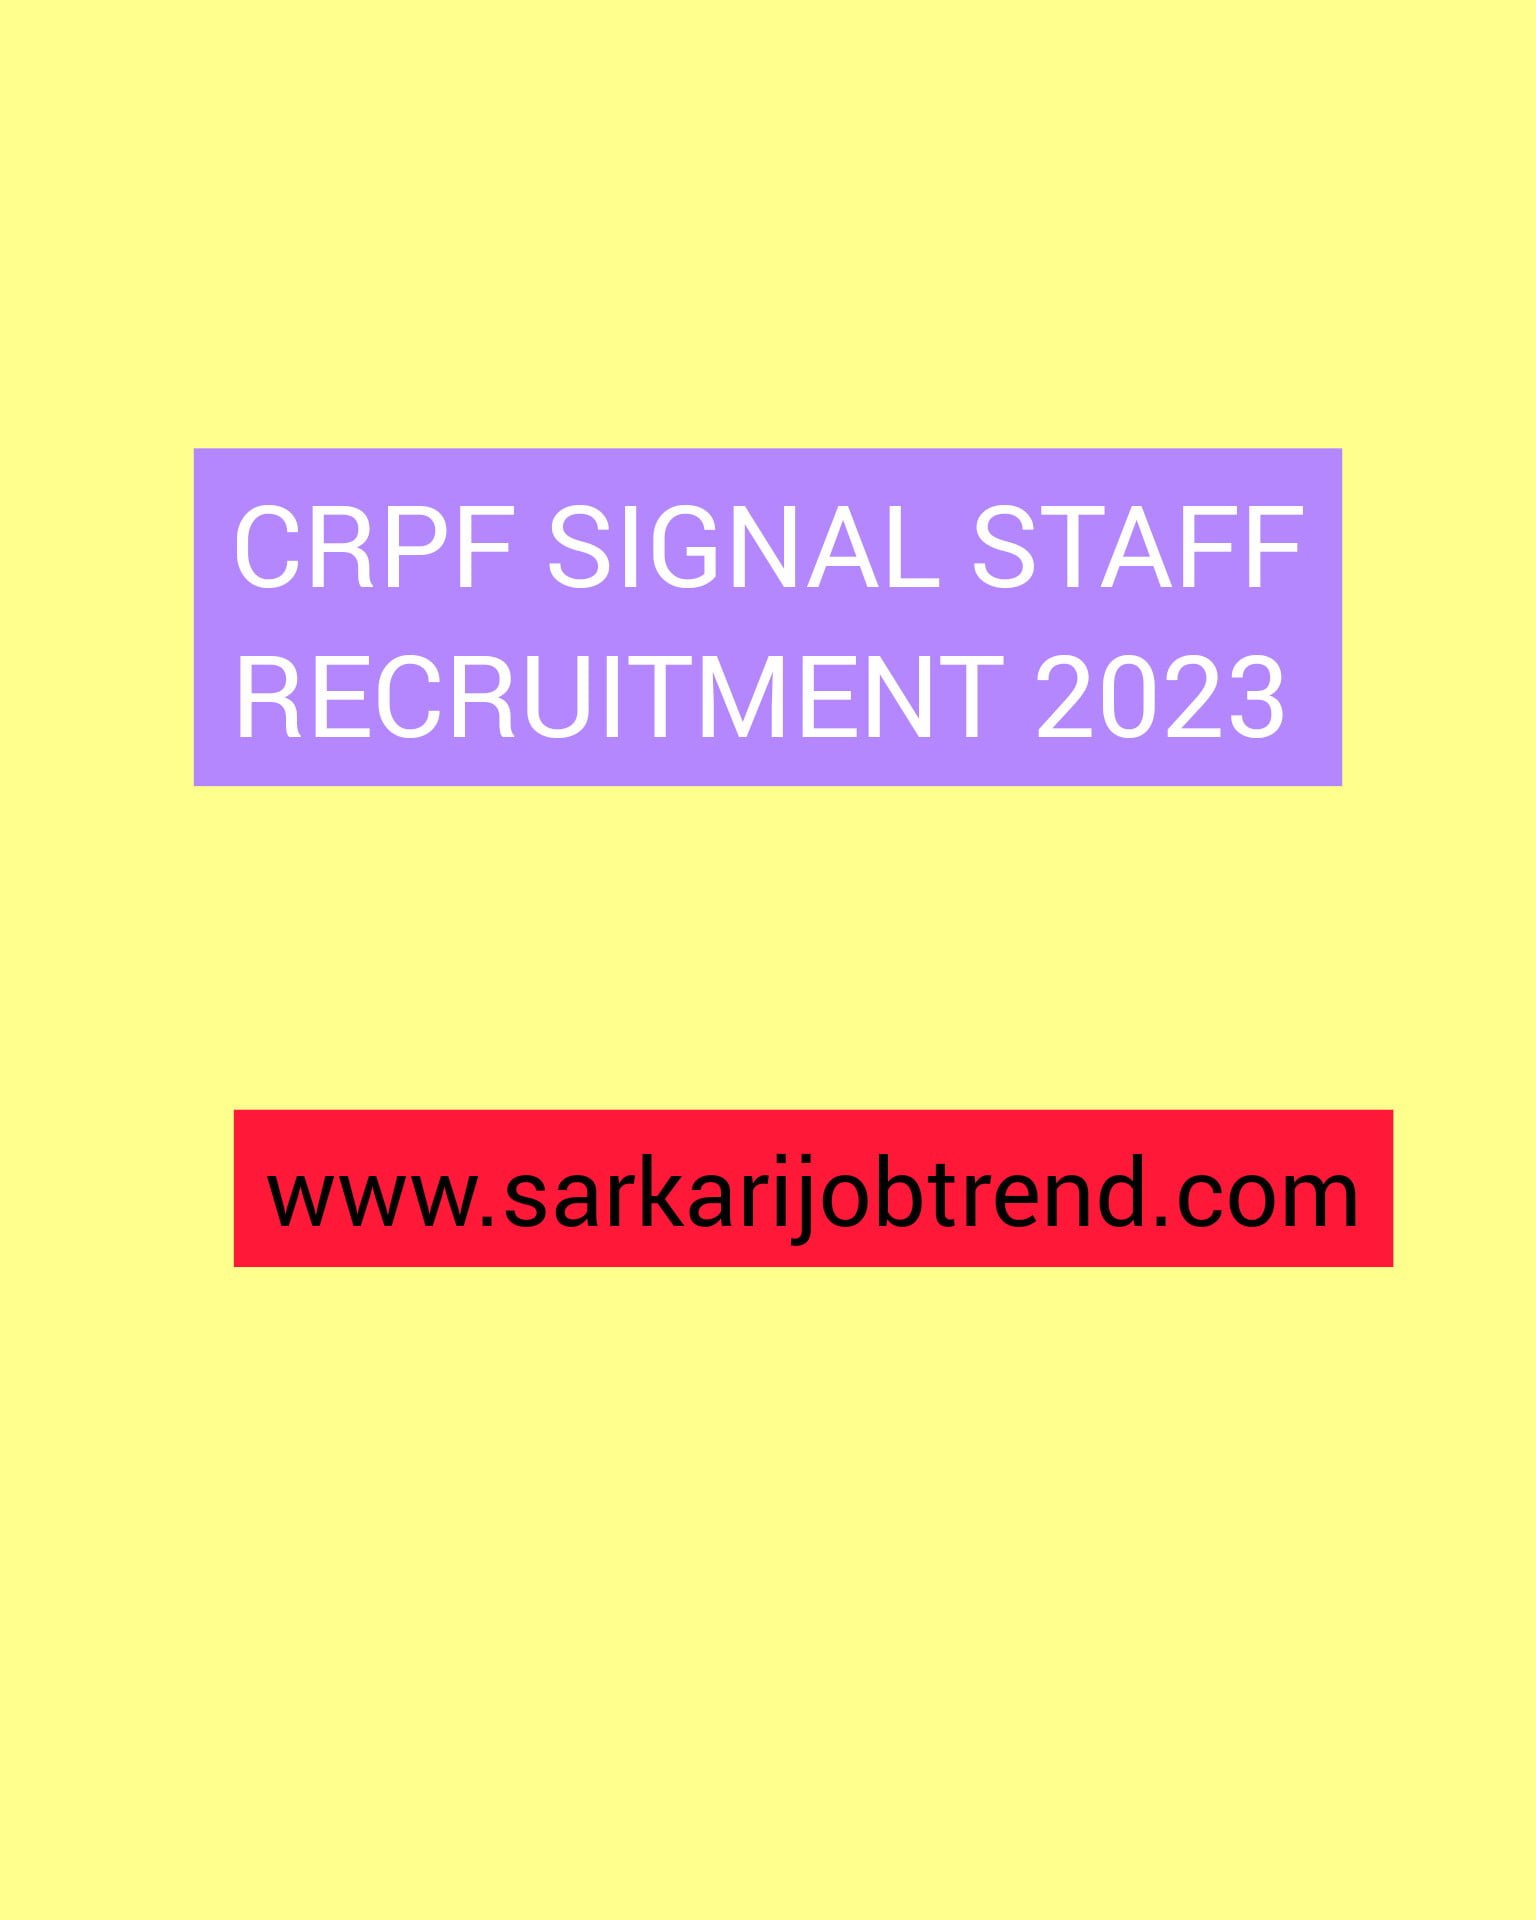 Crpf recruitment si, asi group b, c signal staff 212+post apply now!